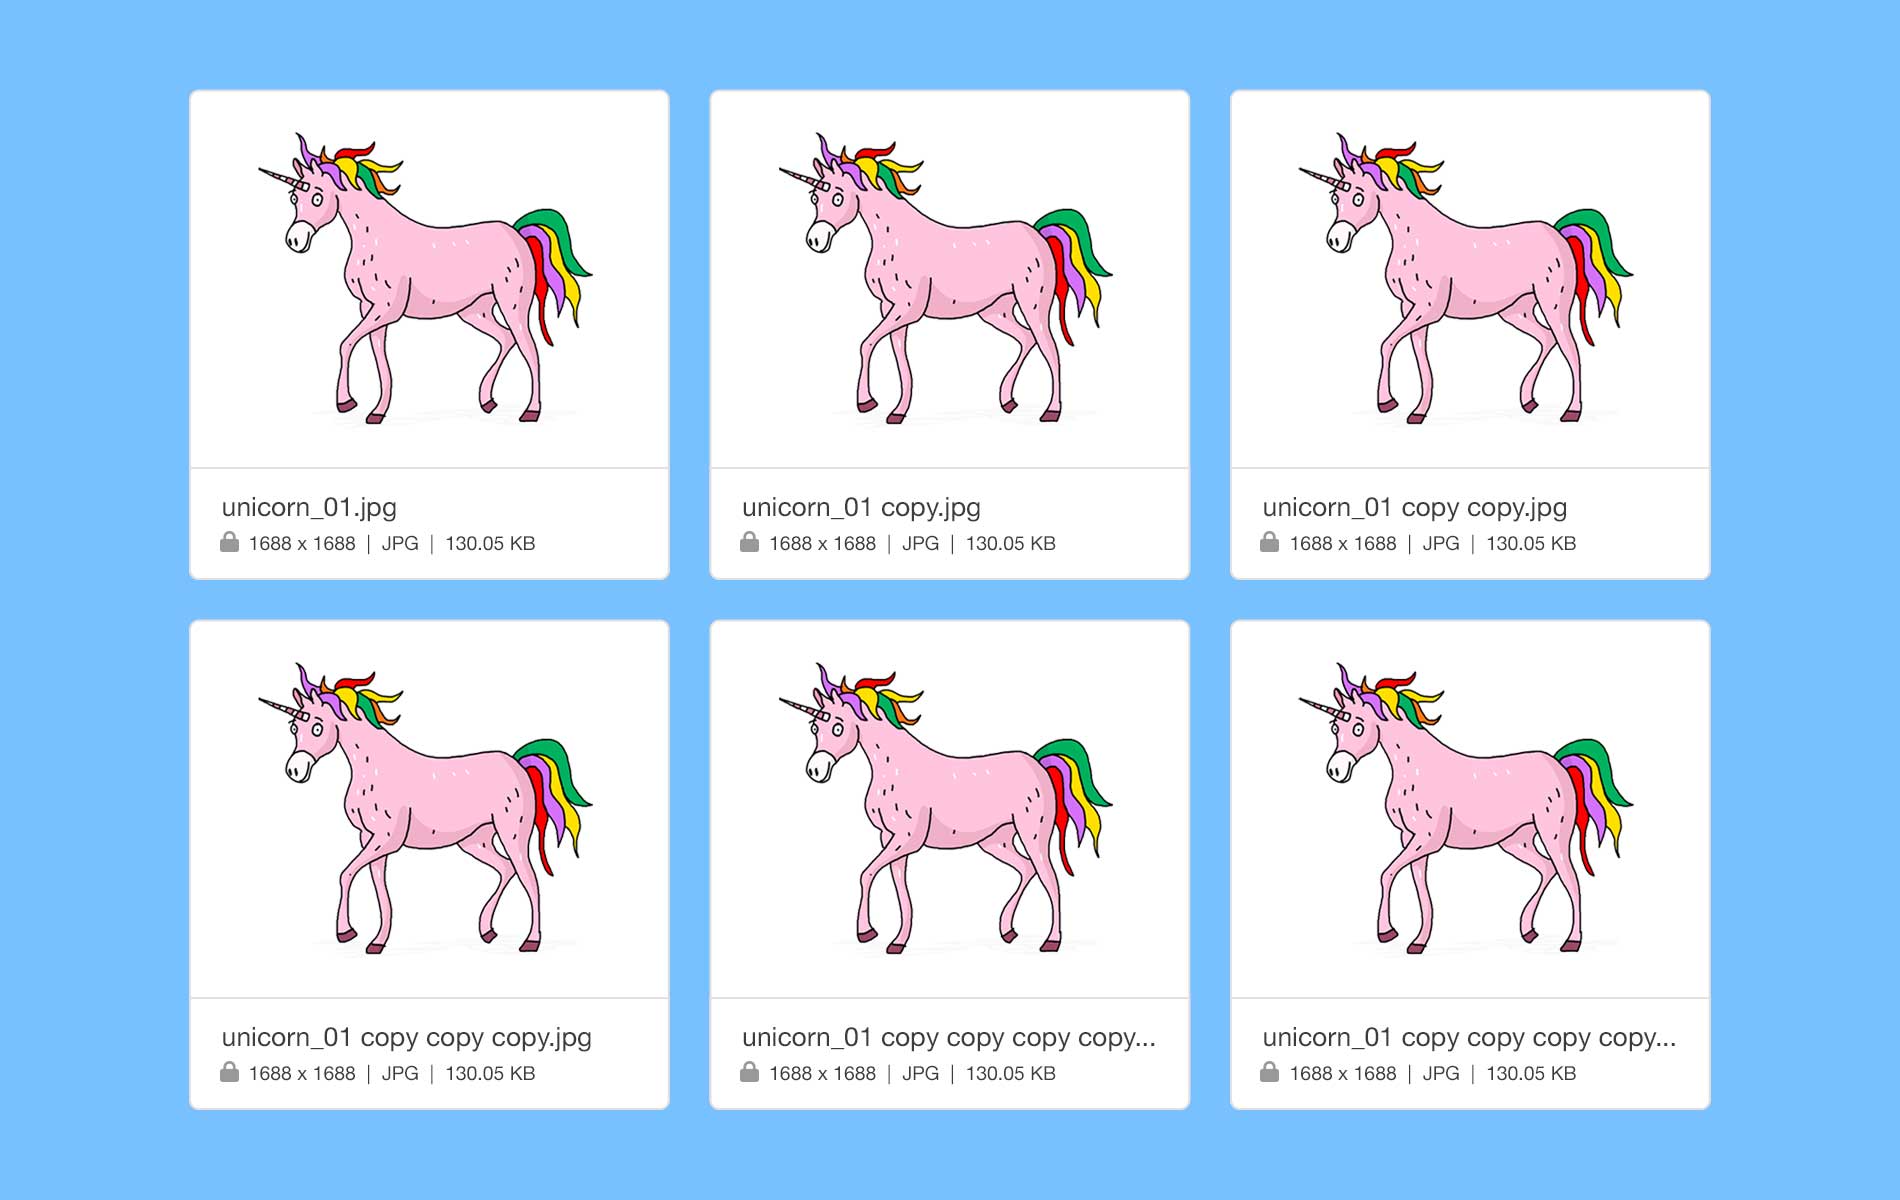 Duplicate unicorn files